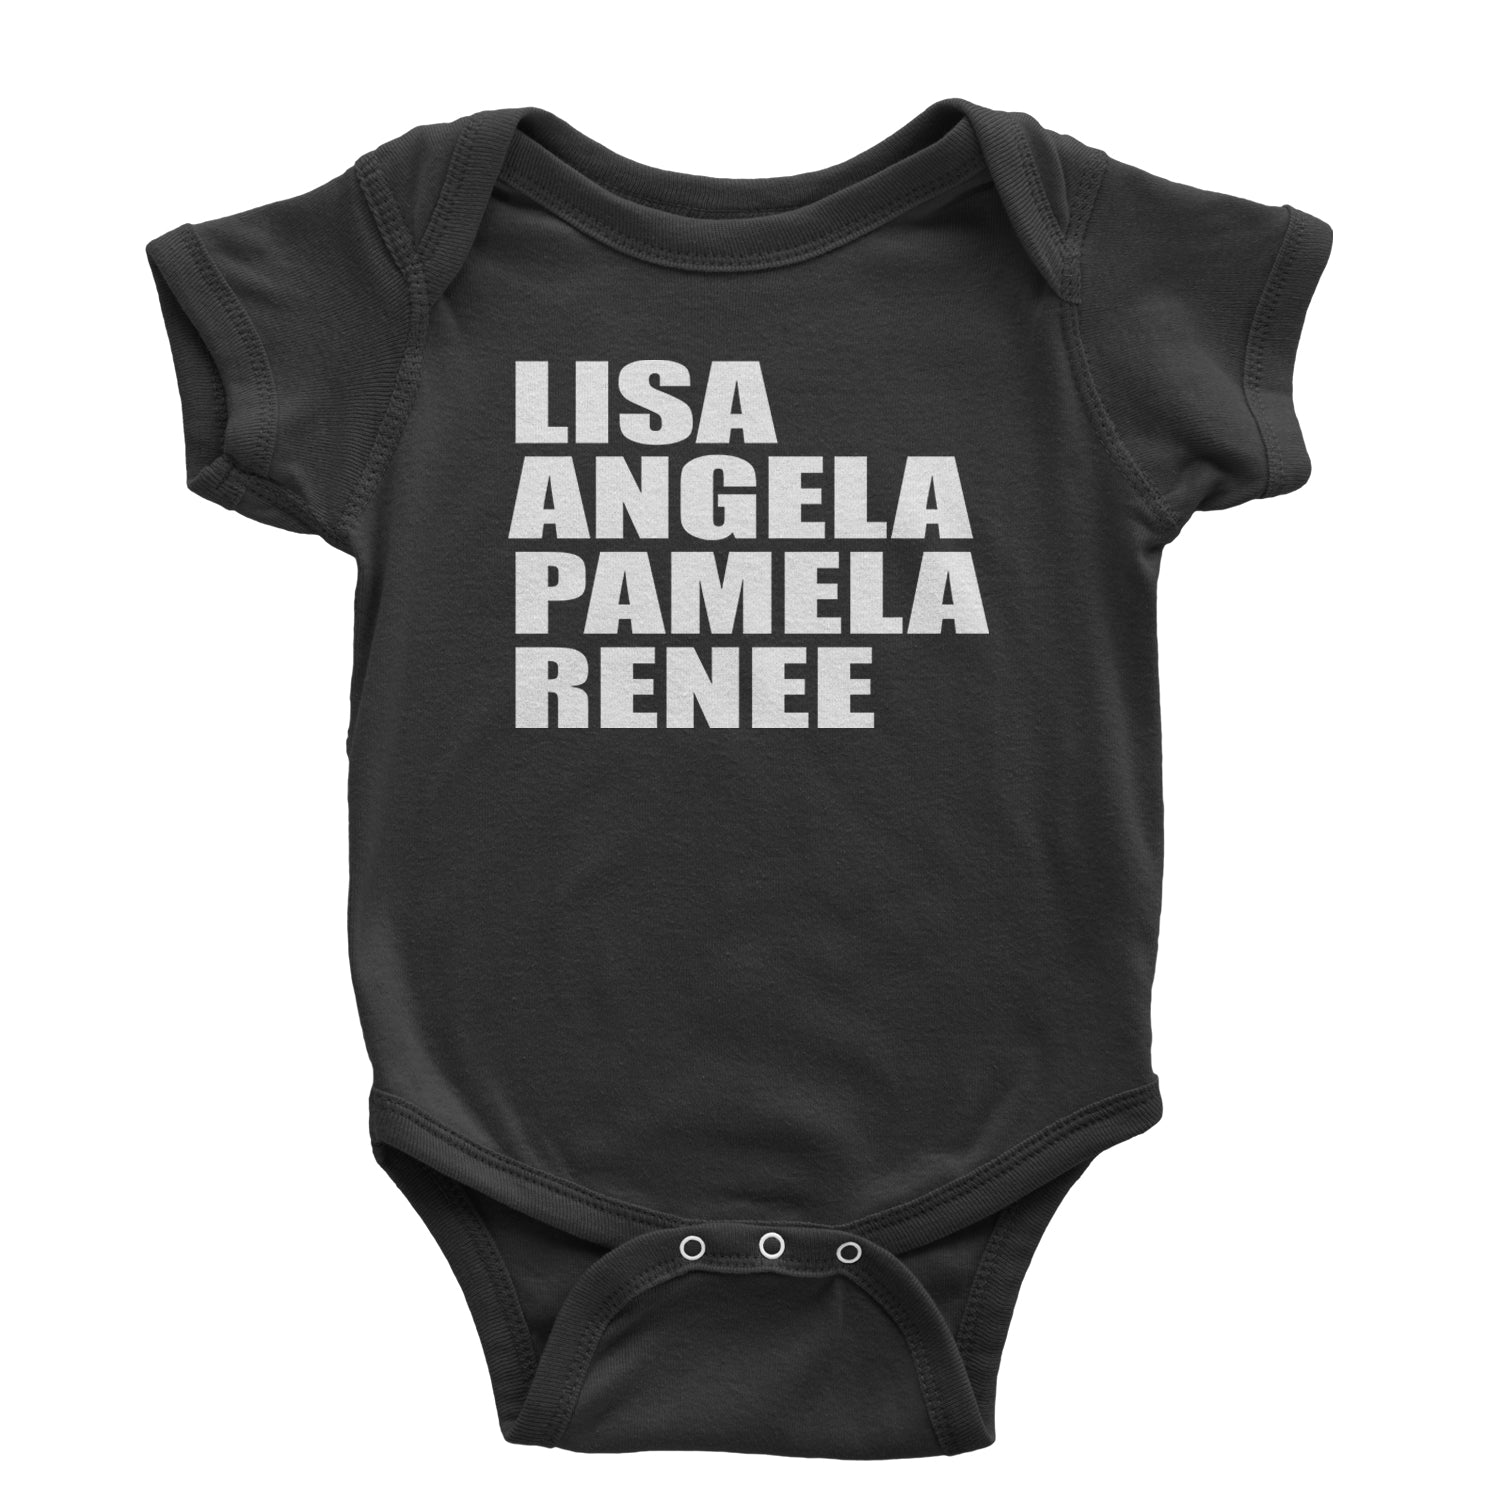 Lisa Angela Pamela Renee Around The Way Girl Infant One-Piece Romper Bodysuit and Toddler T-shirt